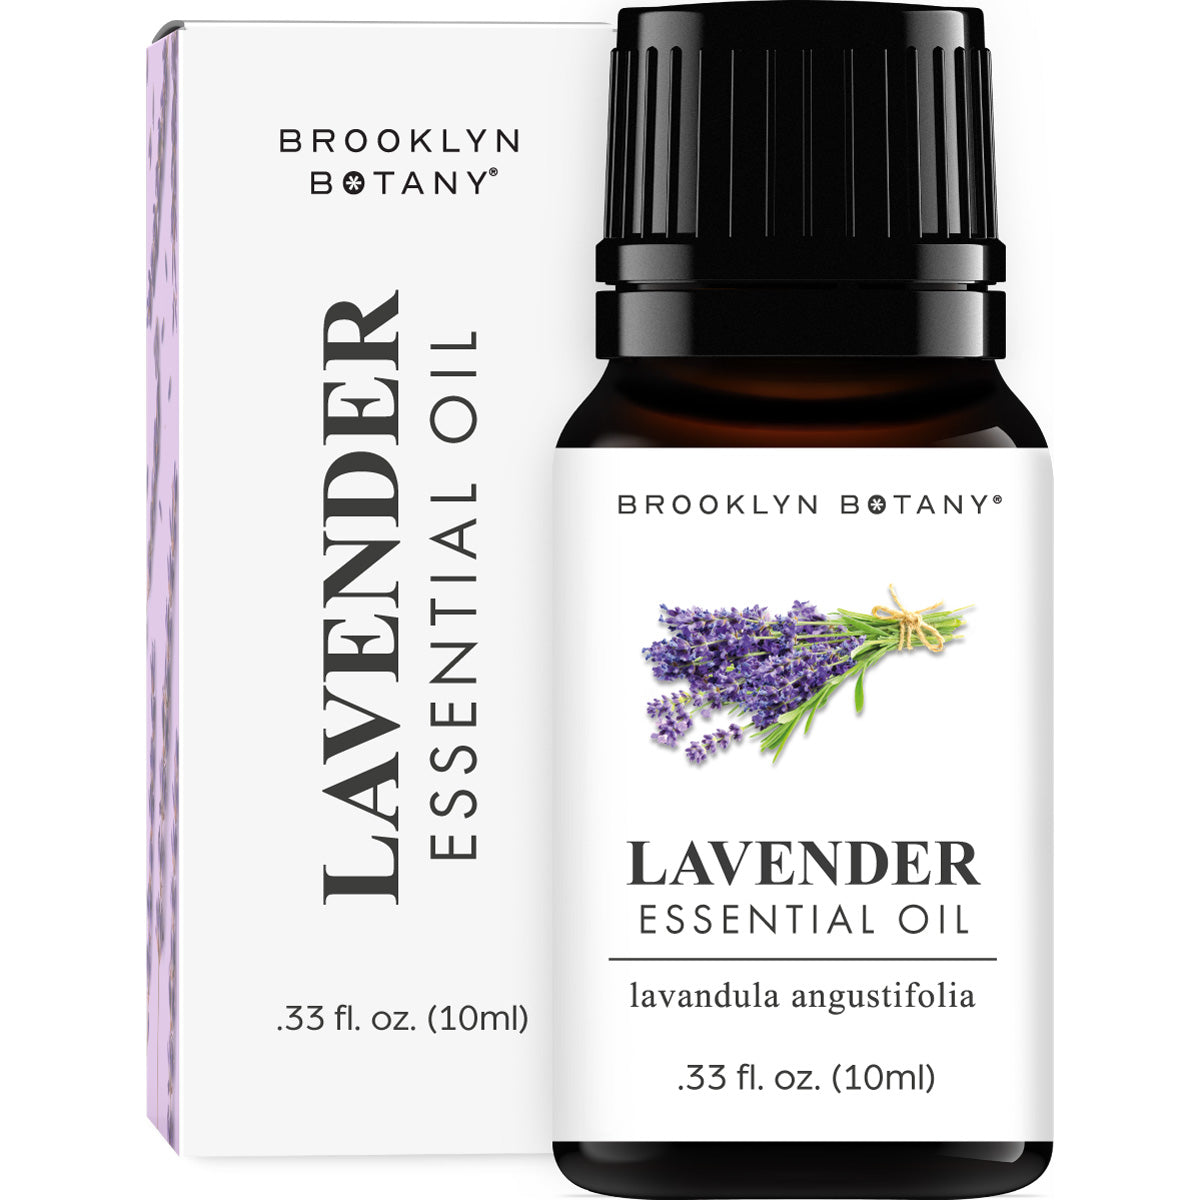 Essential Oil, Organic Lavender, 10ml. - mtsapolaonline